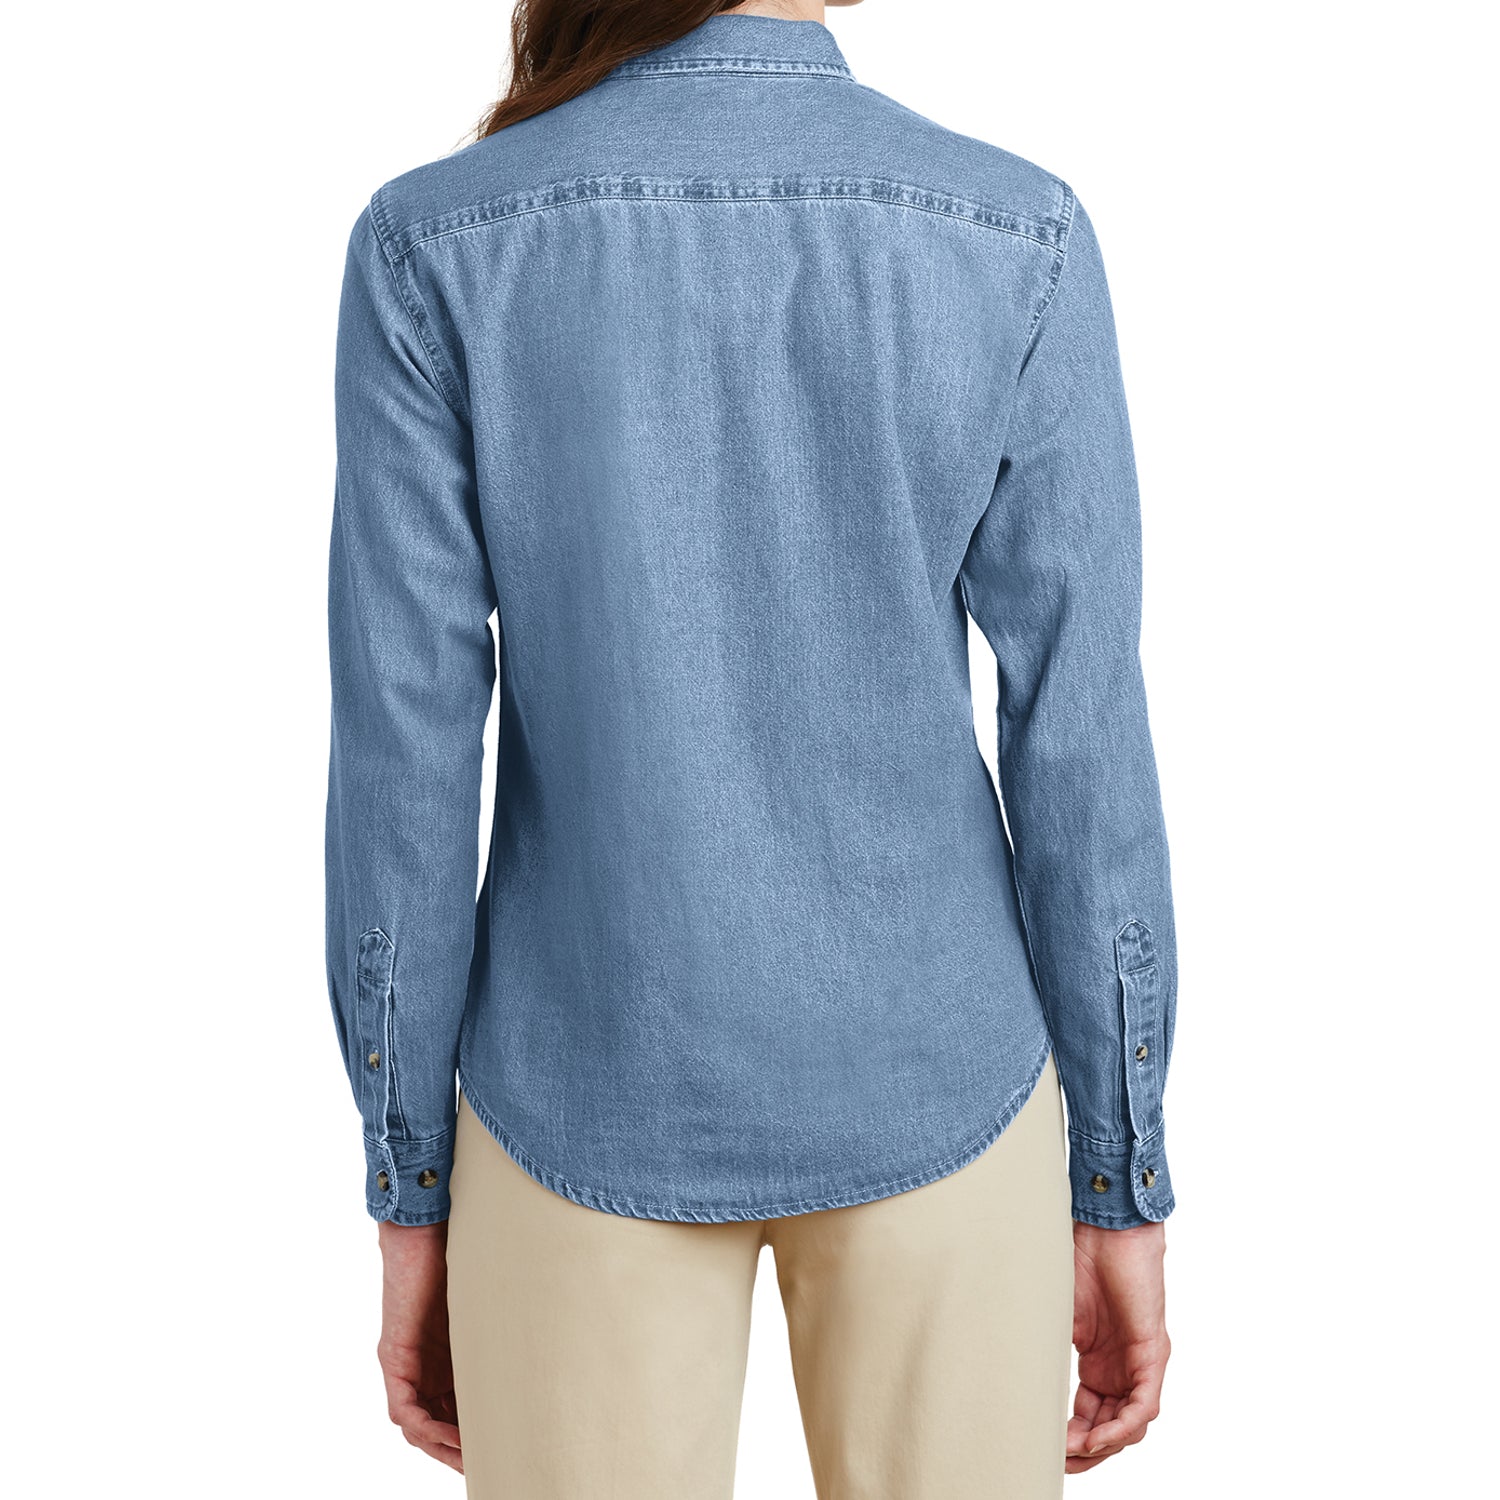 Mafoose Women's Long Sleeve Value Denim Shirt Faded Blue-Back